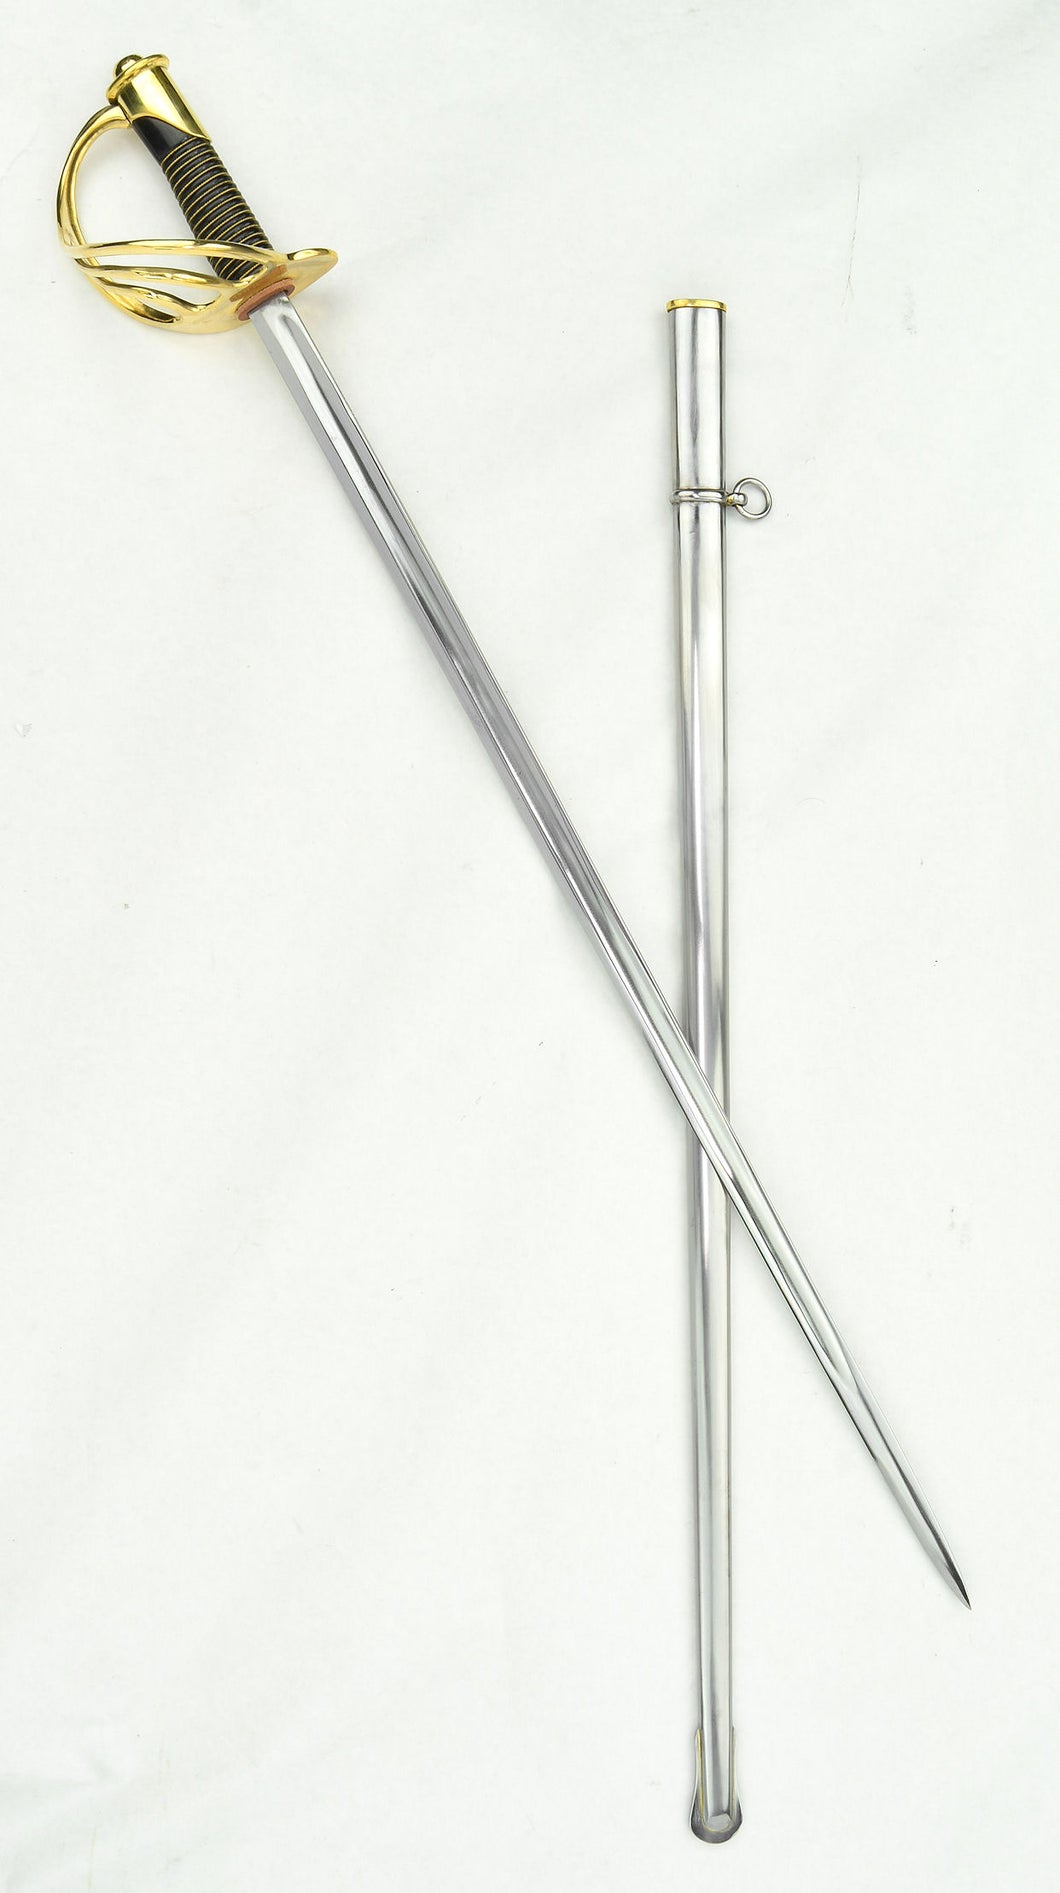 French Model 1961 Dress Sword